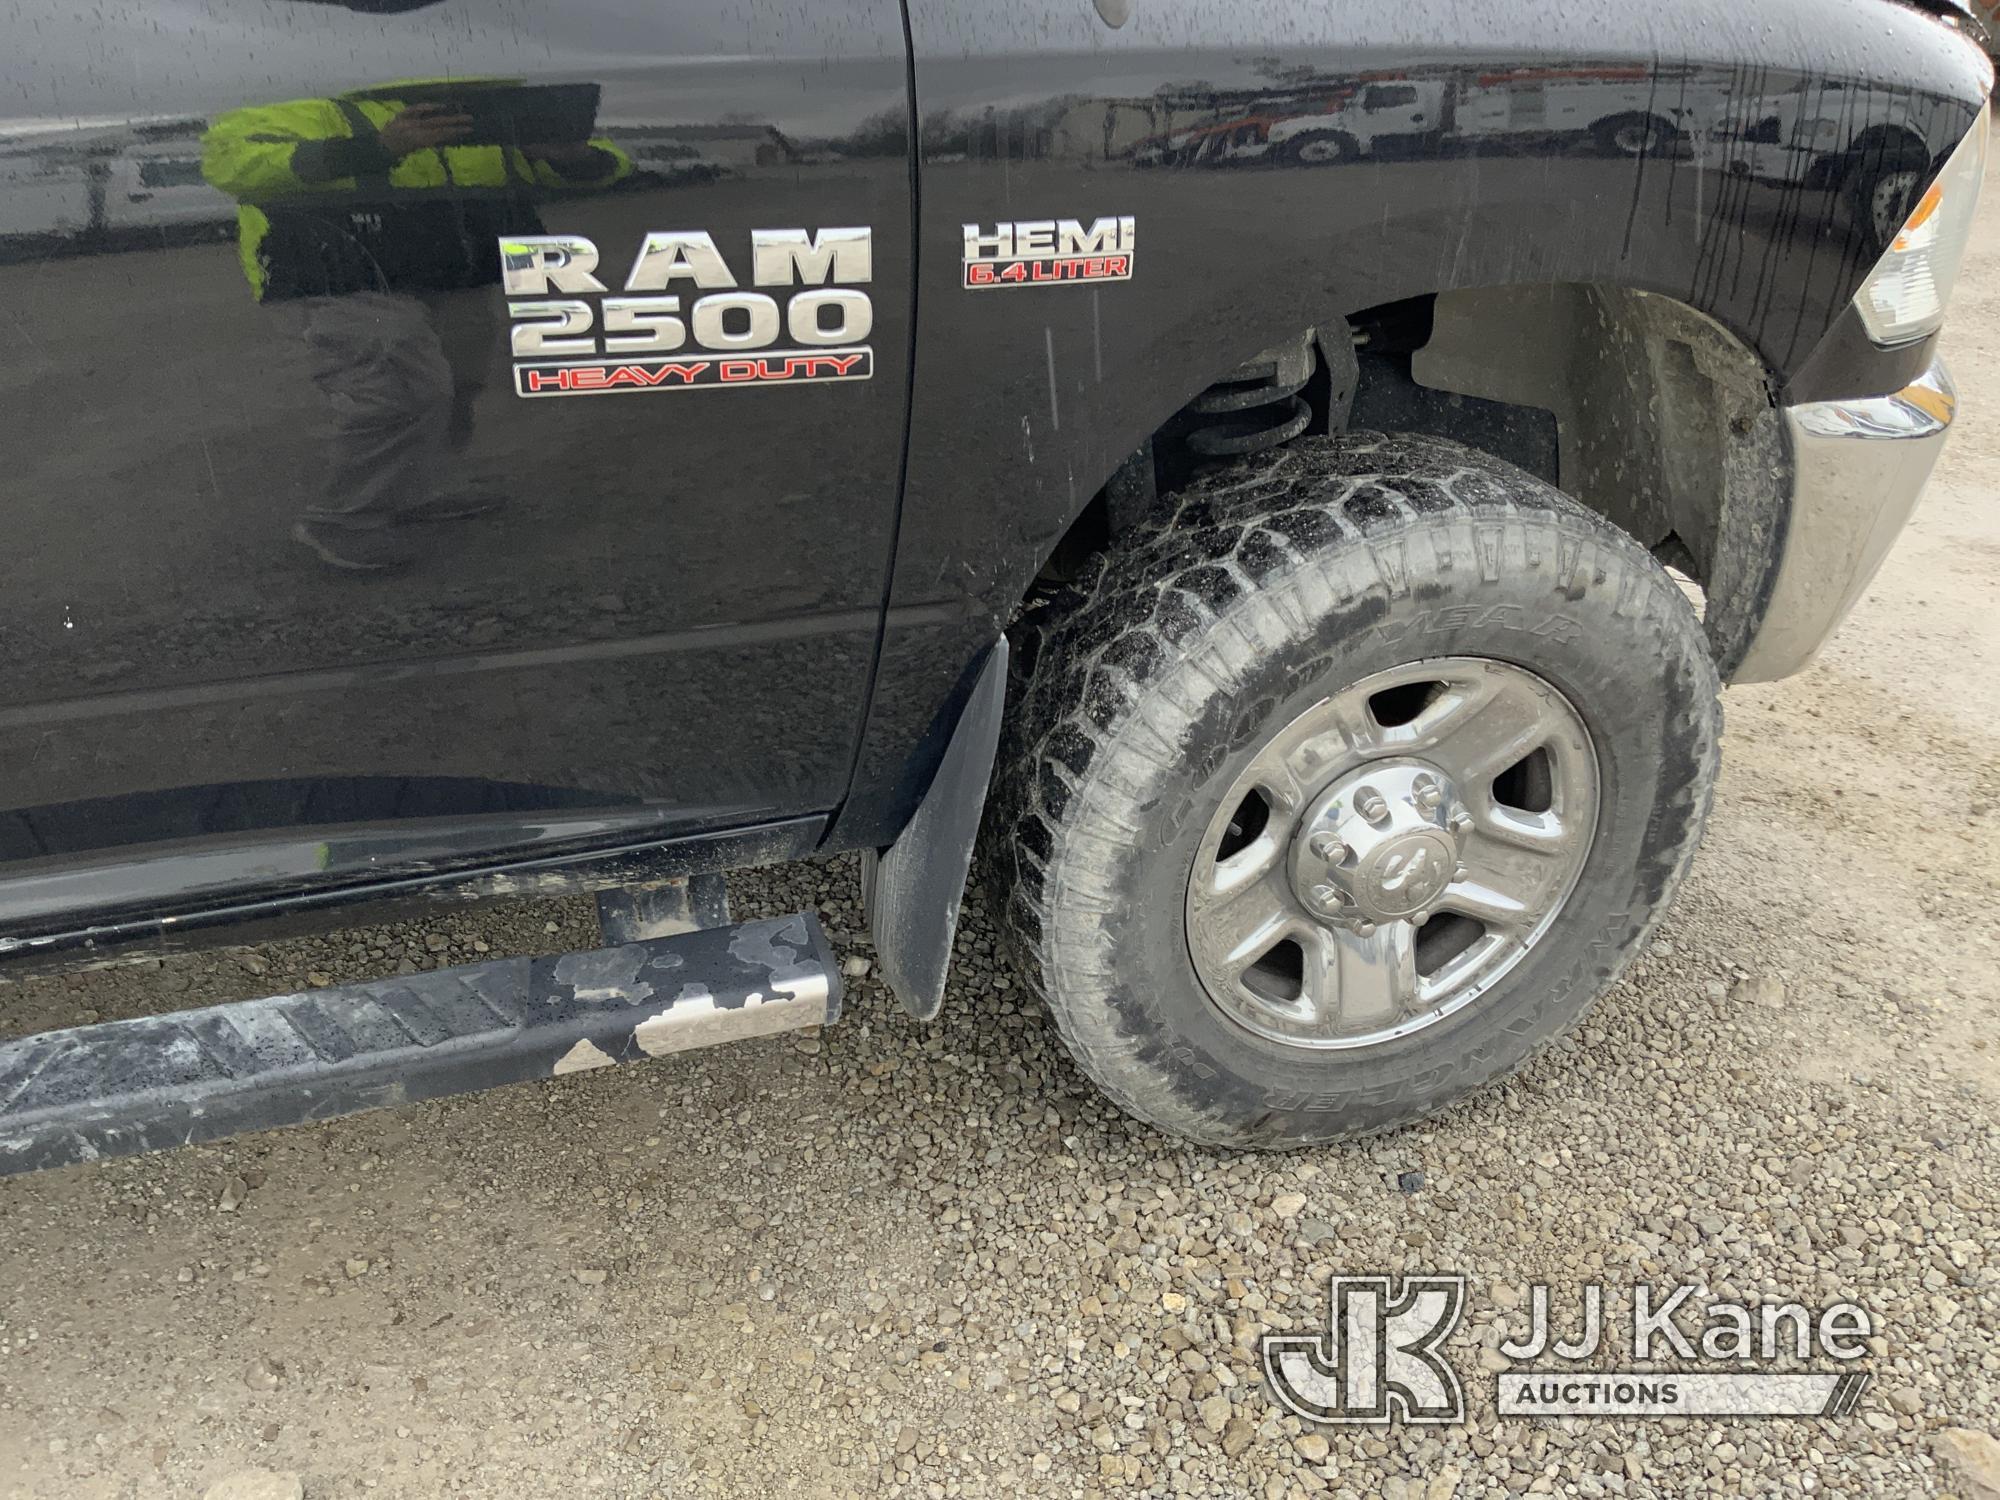 (Fort Wayne, IN) 2017 RAM 2500 4x4 Crew-Cab Pickup Truck Runs & Moves) (Engine Noise, Body Damage